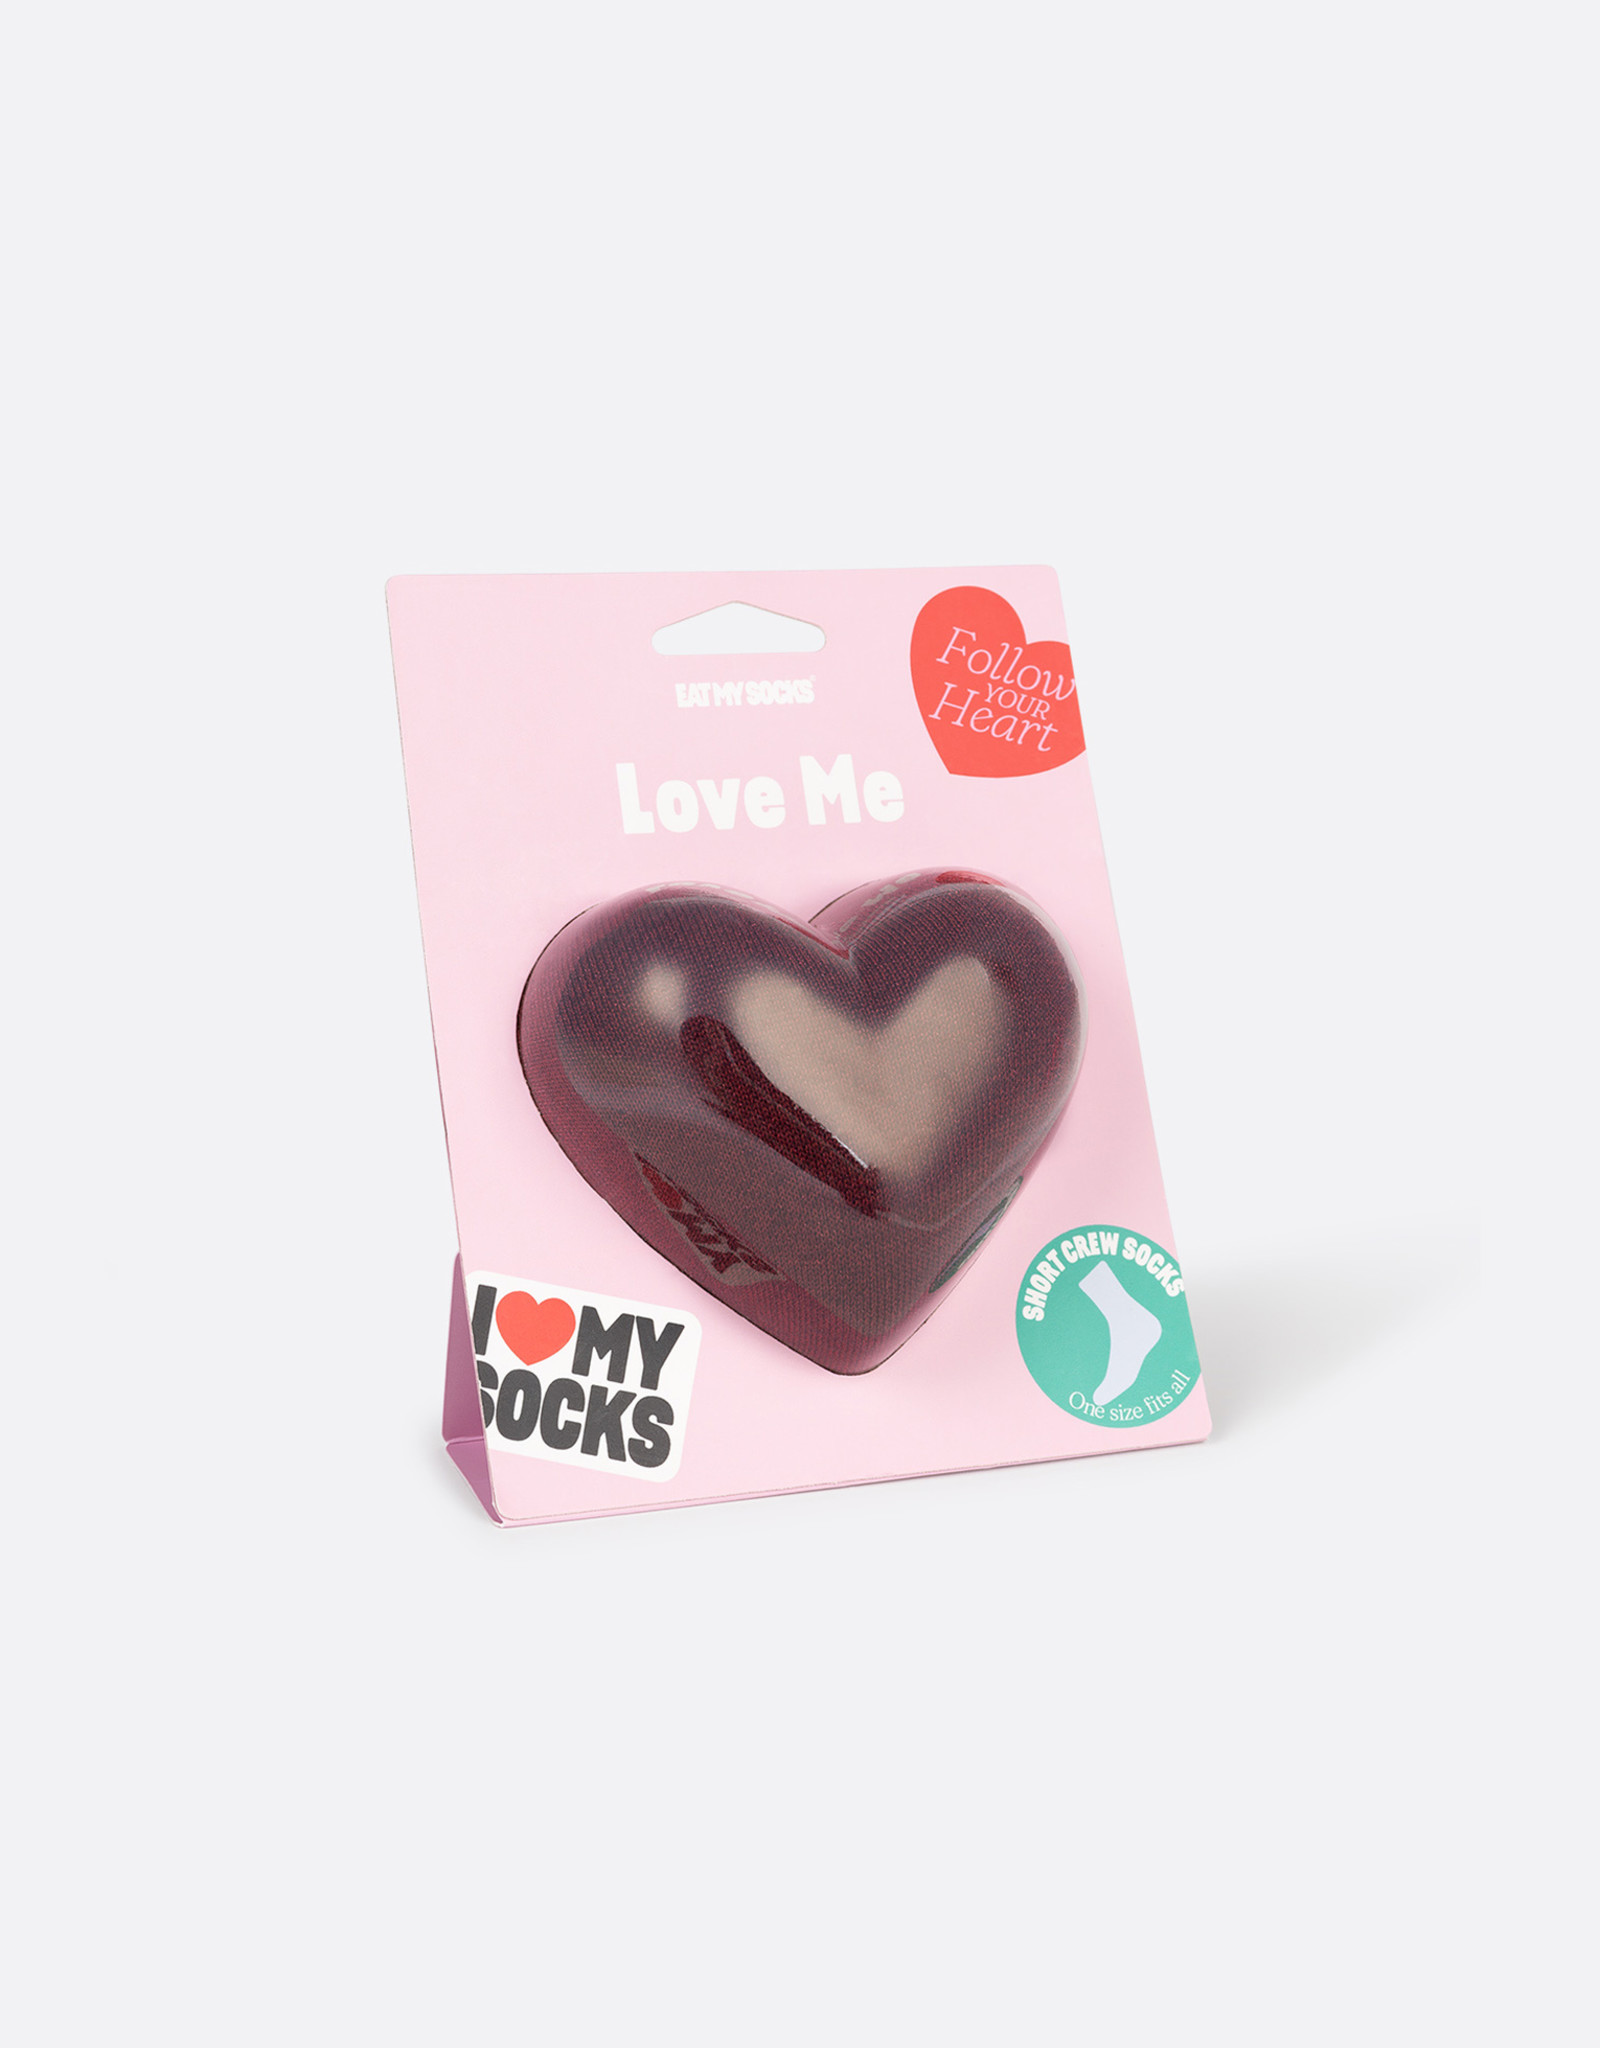 Doiy Socks - Love Me Red